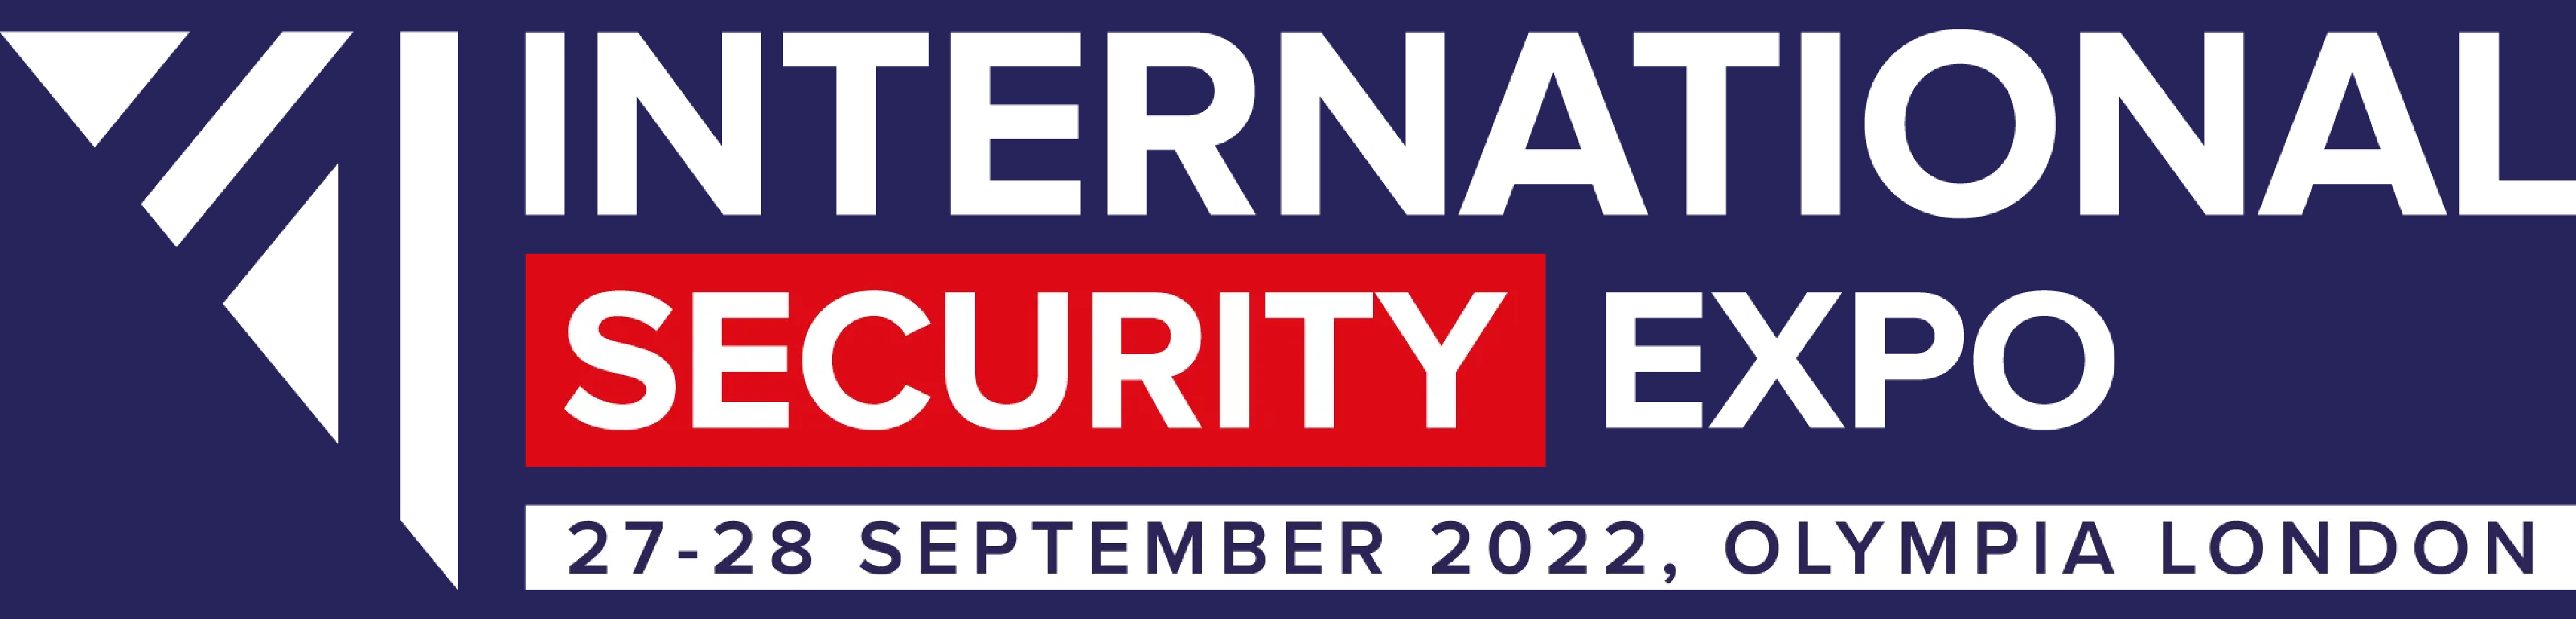 International Security Expo 2022